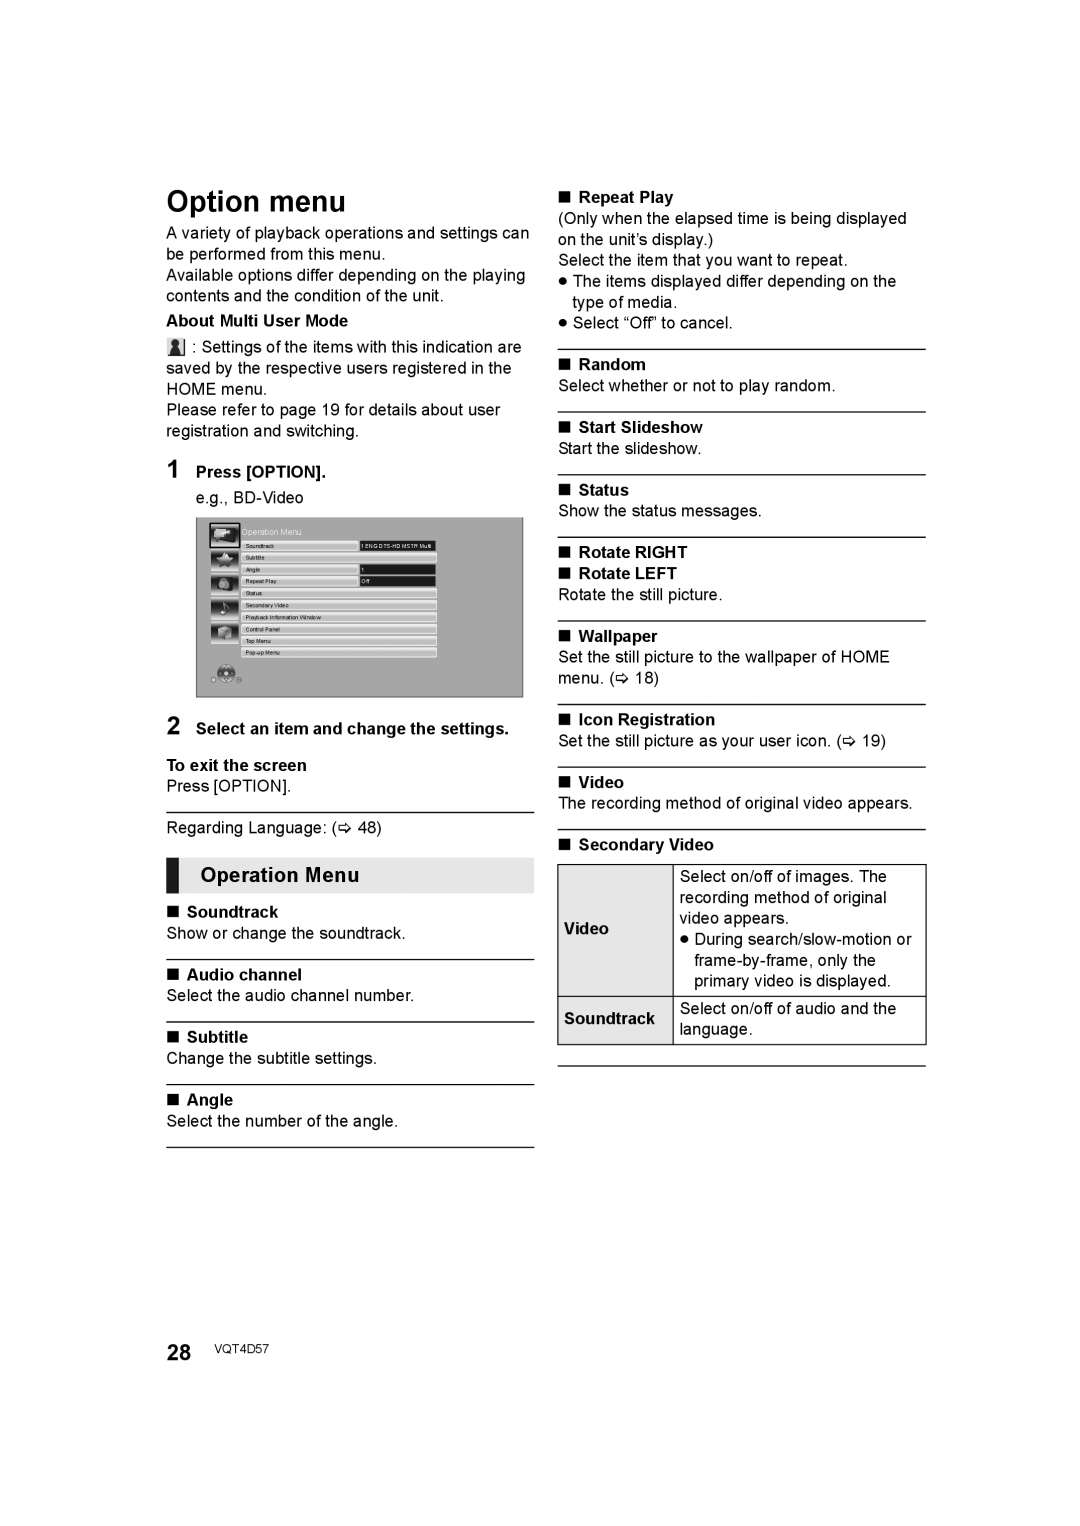 Panasonic SC-BTT190 manual Option menu, Operation Menu 